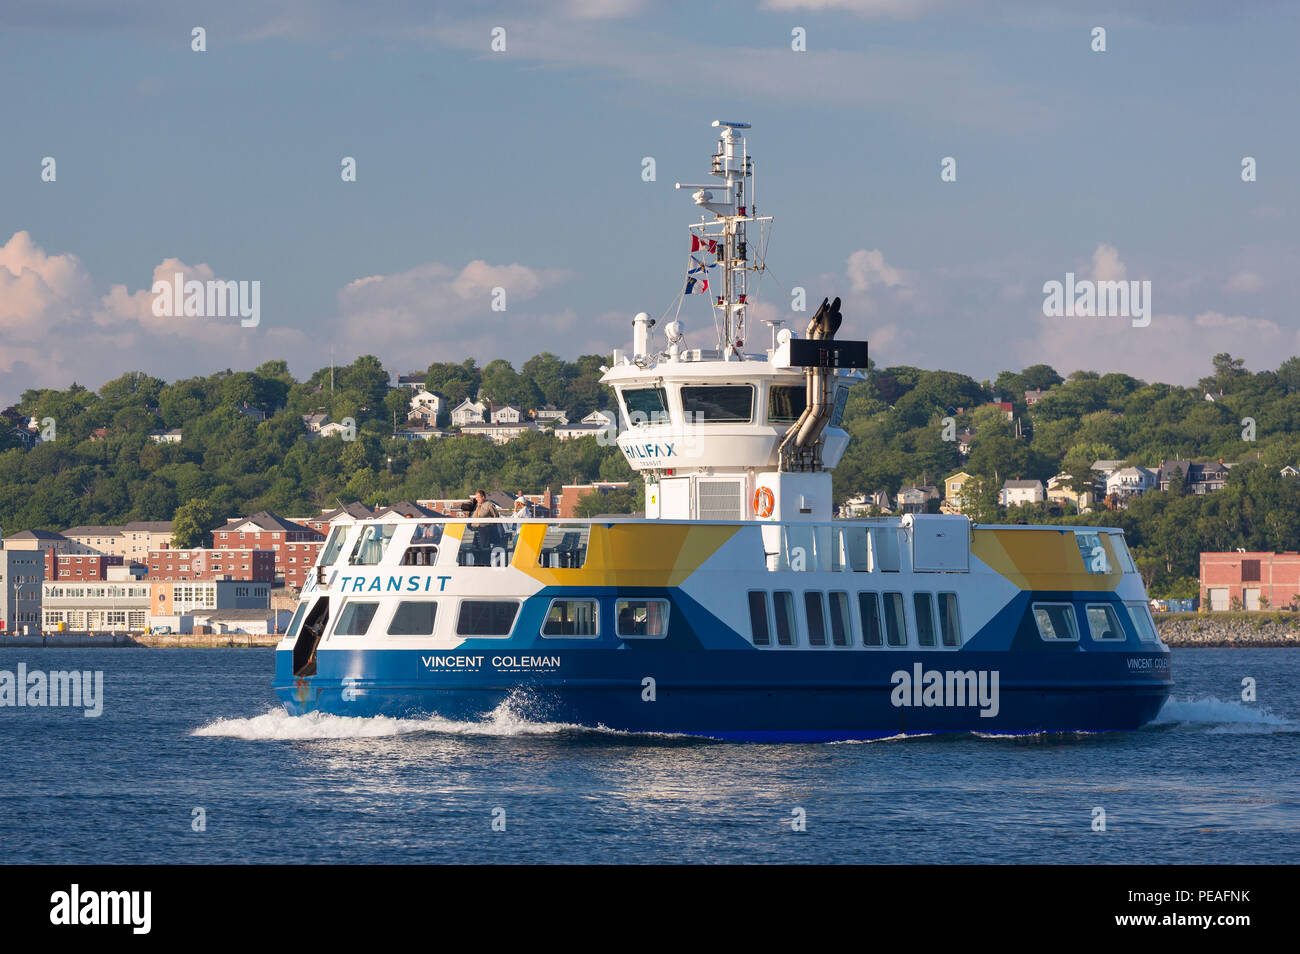 HALIFAX, NOVA SCOTIA, CANADA - Woodside Ferry boat, named Vincent Coleman,  in harbor. Stock Photo